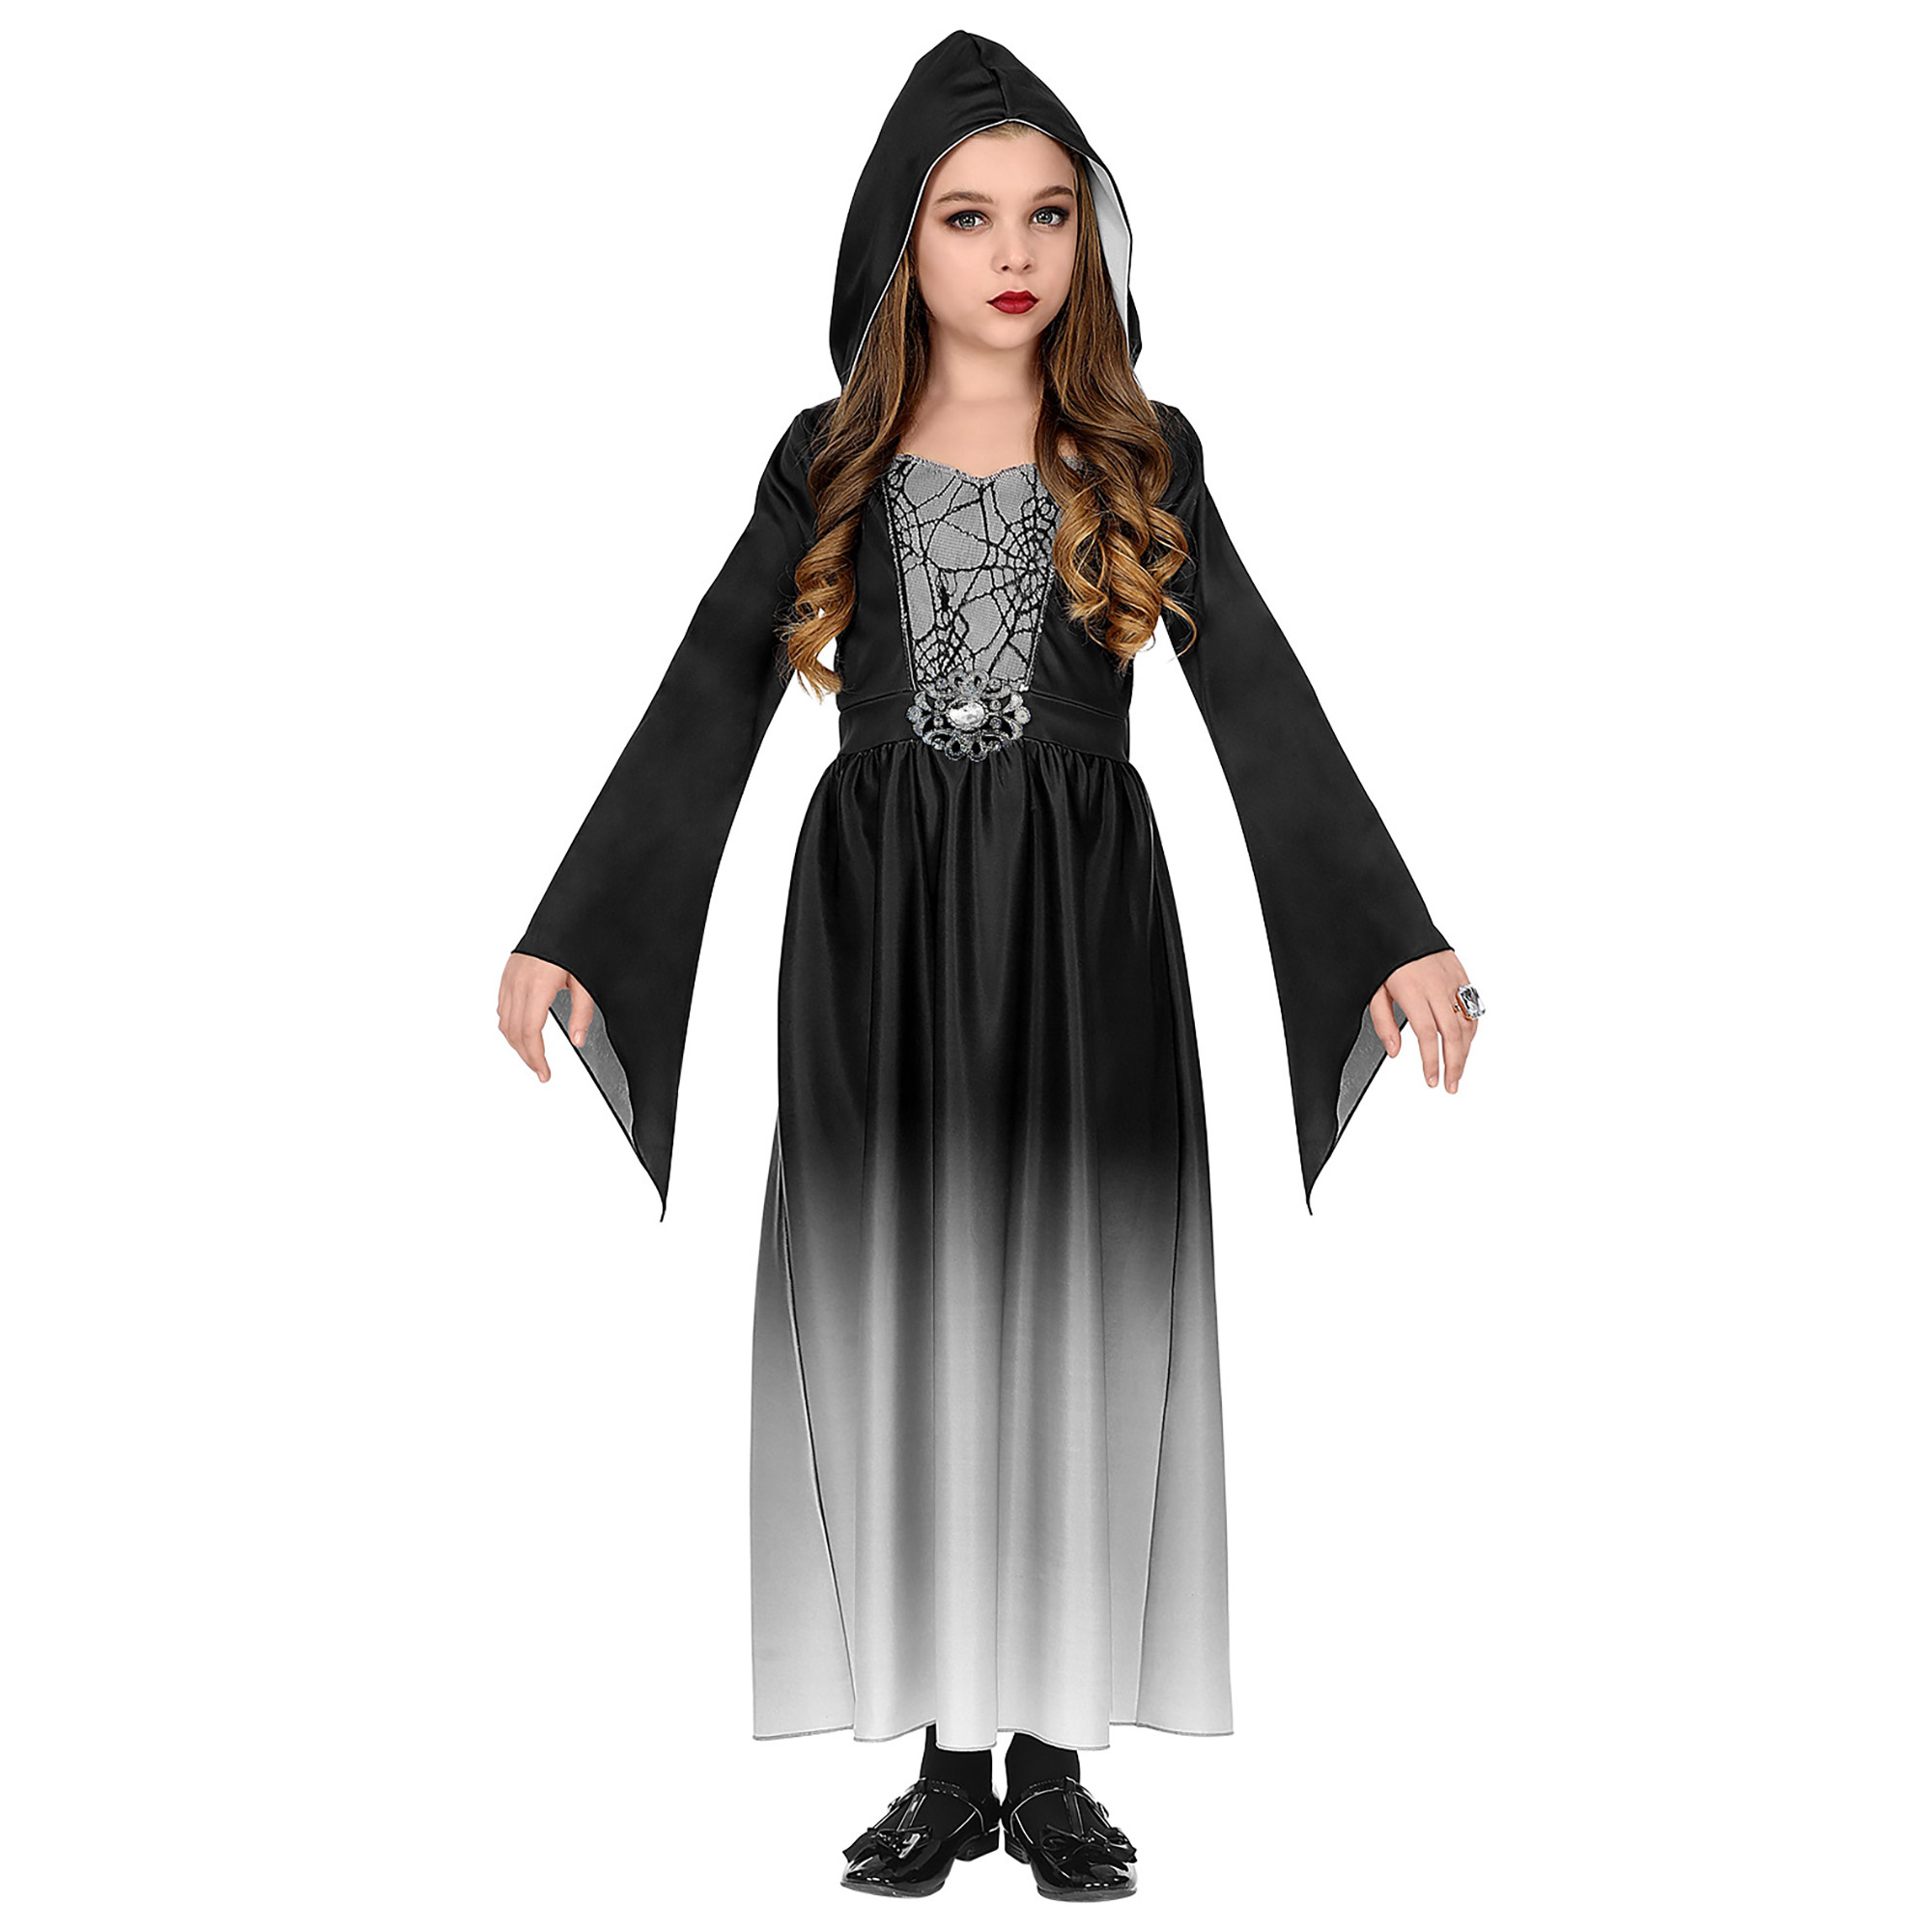 WIDMANN - Witte vampier gravin outfit voor meisjes - 158 (11-13 jaar)